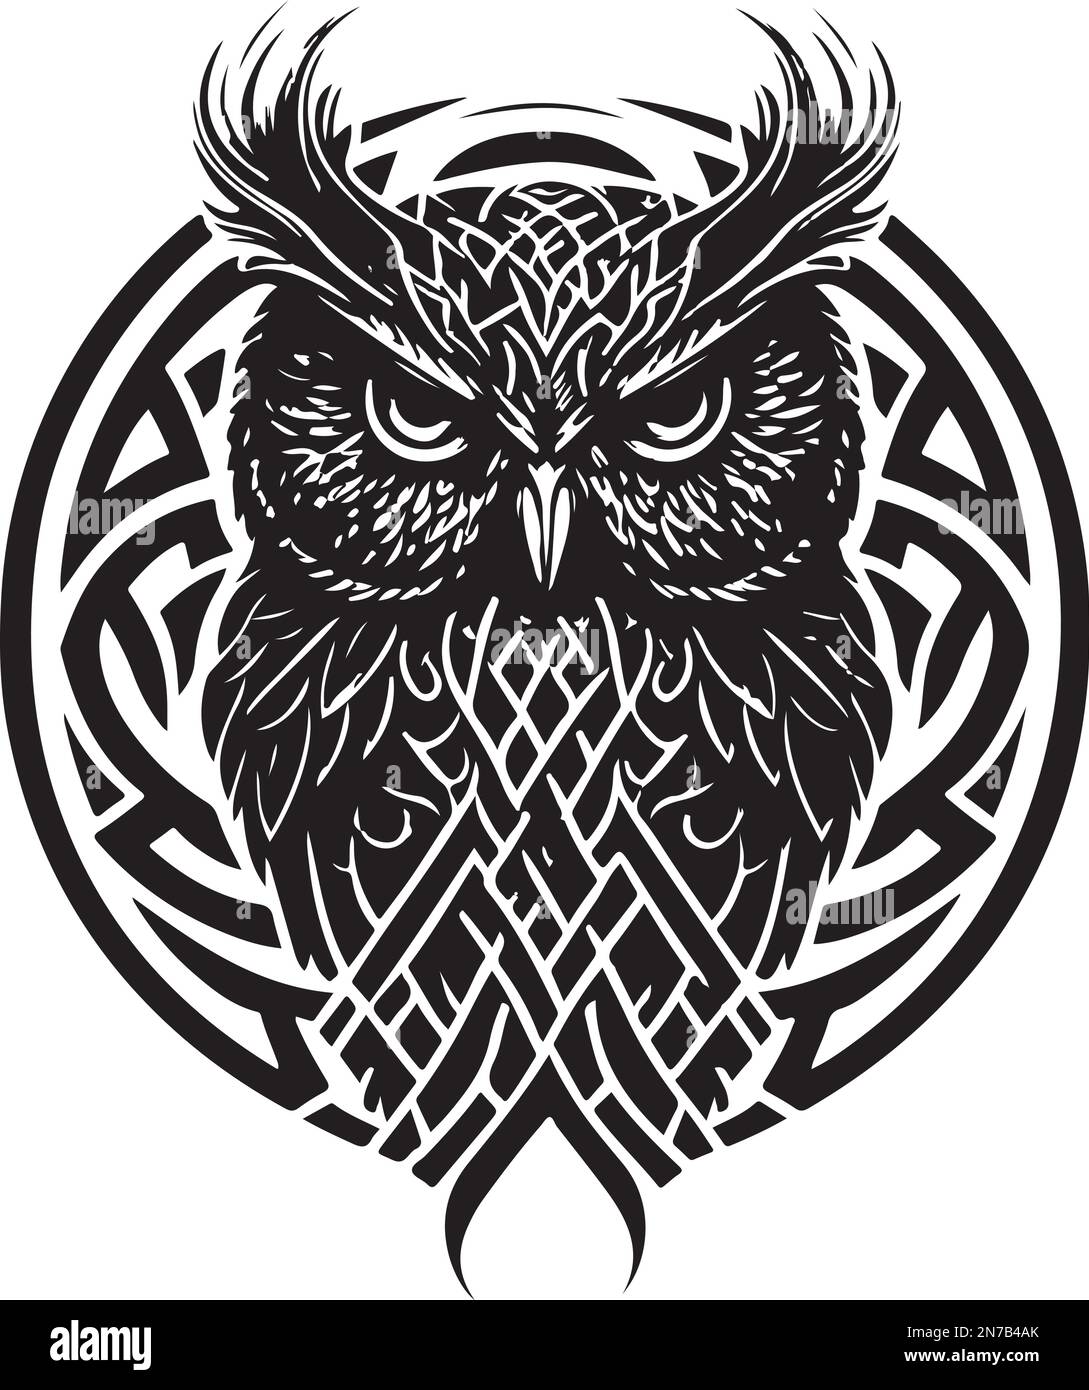 30 Celtic Owl Tattoo Designs For Men  Knot Ink Ideas